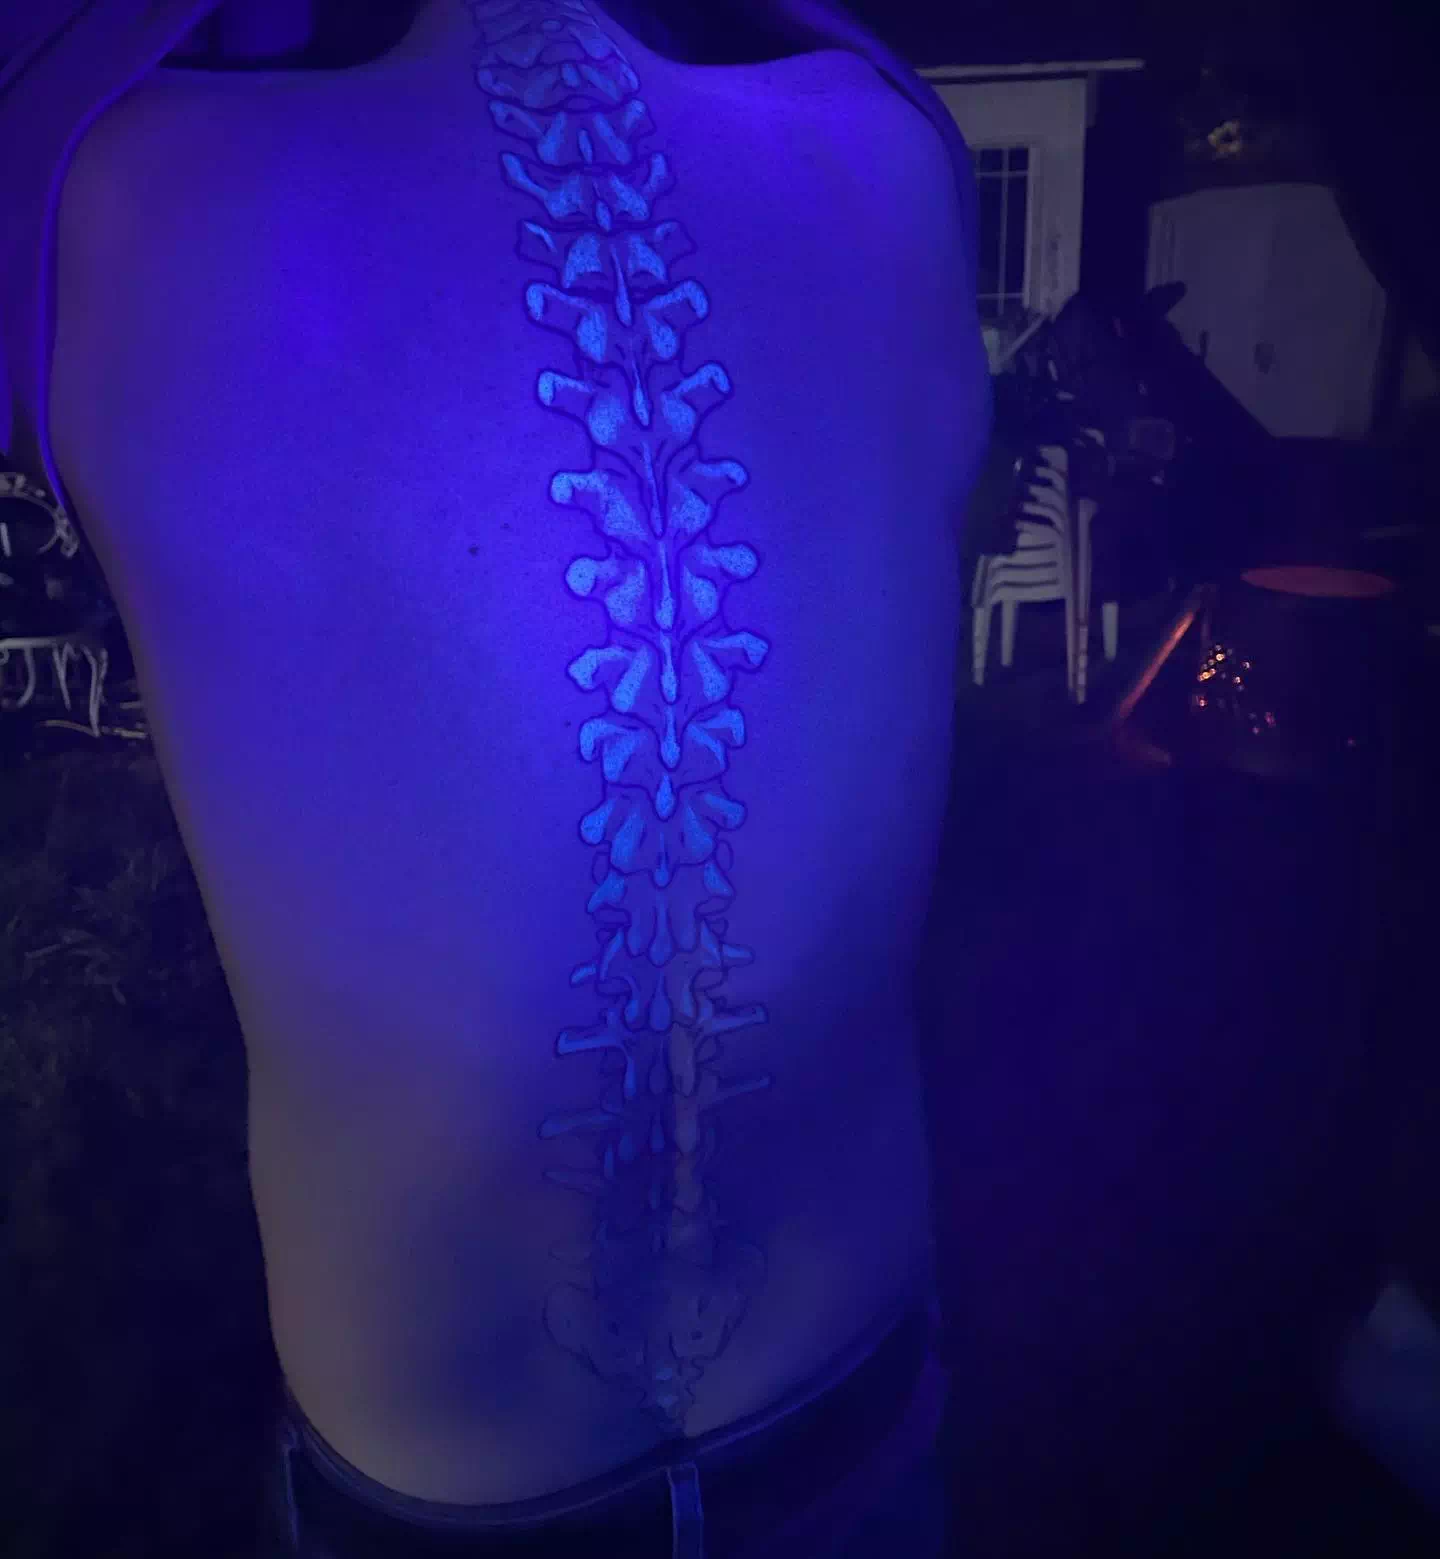 Back Glow In The Dark Tattoo 2